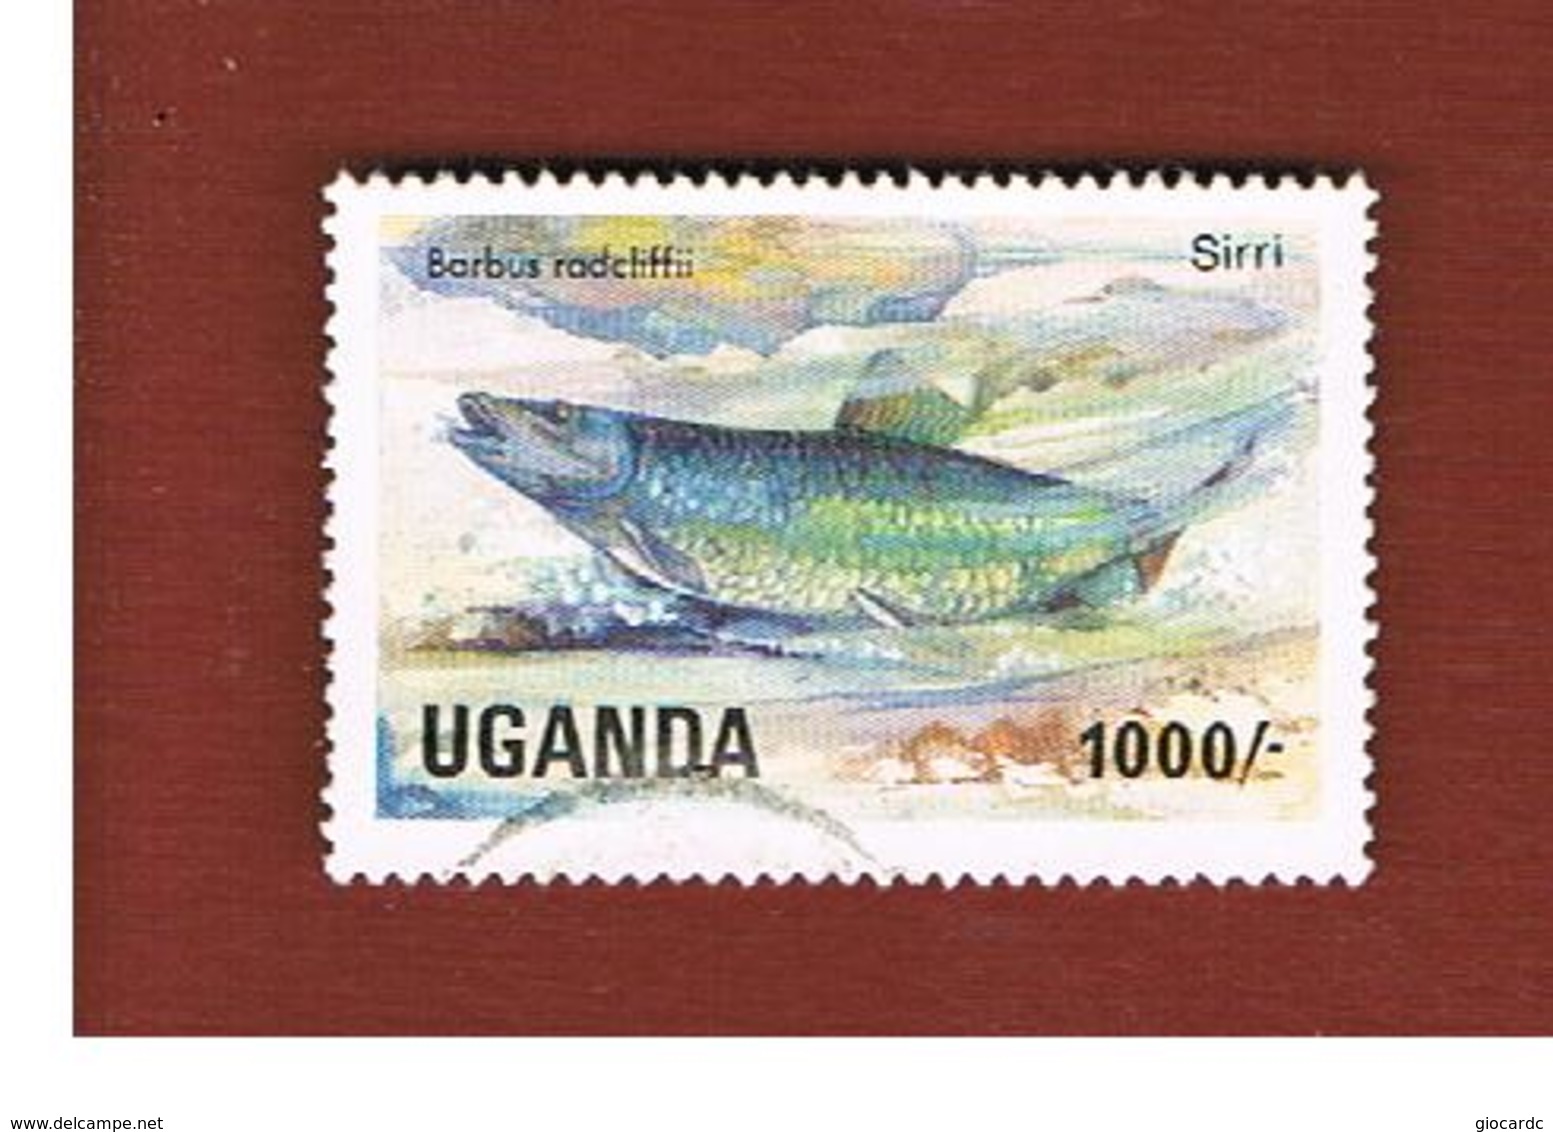 UGANDA   - SG 466   -  1985 LAKE FISHES: RADCLIFFE BARB      - USED ° - Uganda (1962-...)